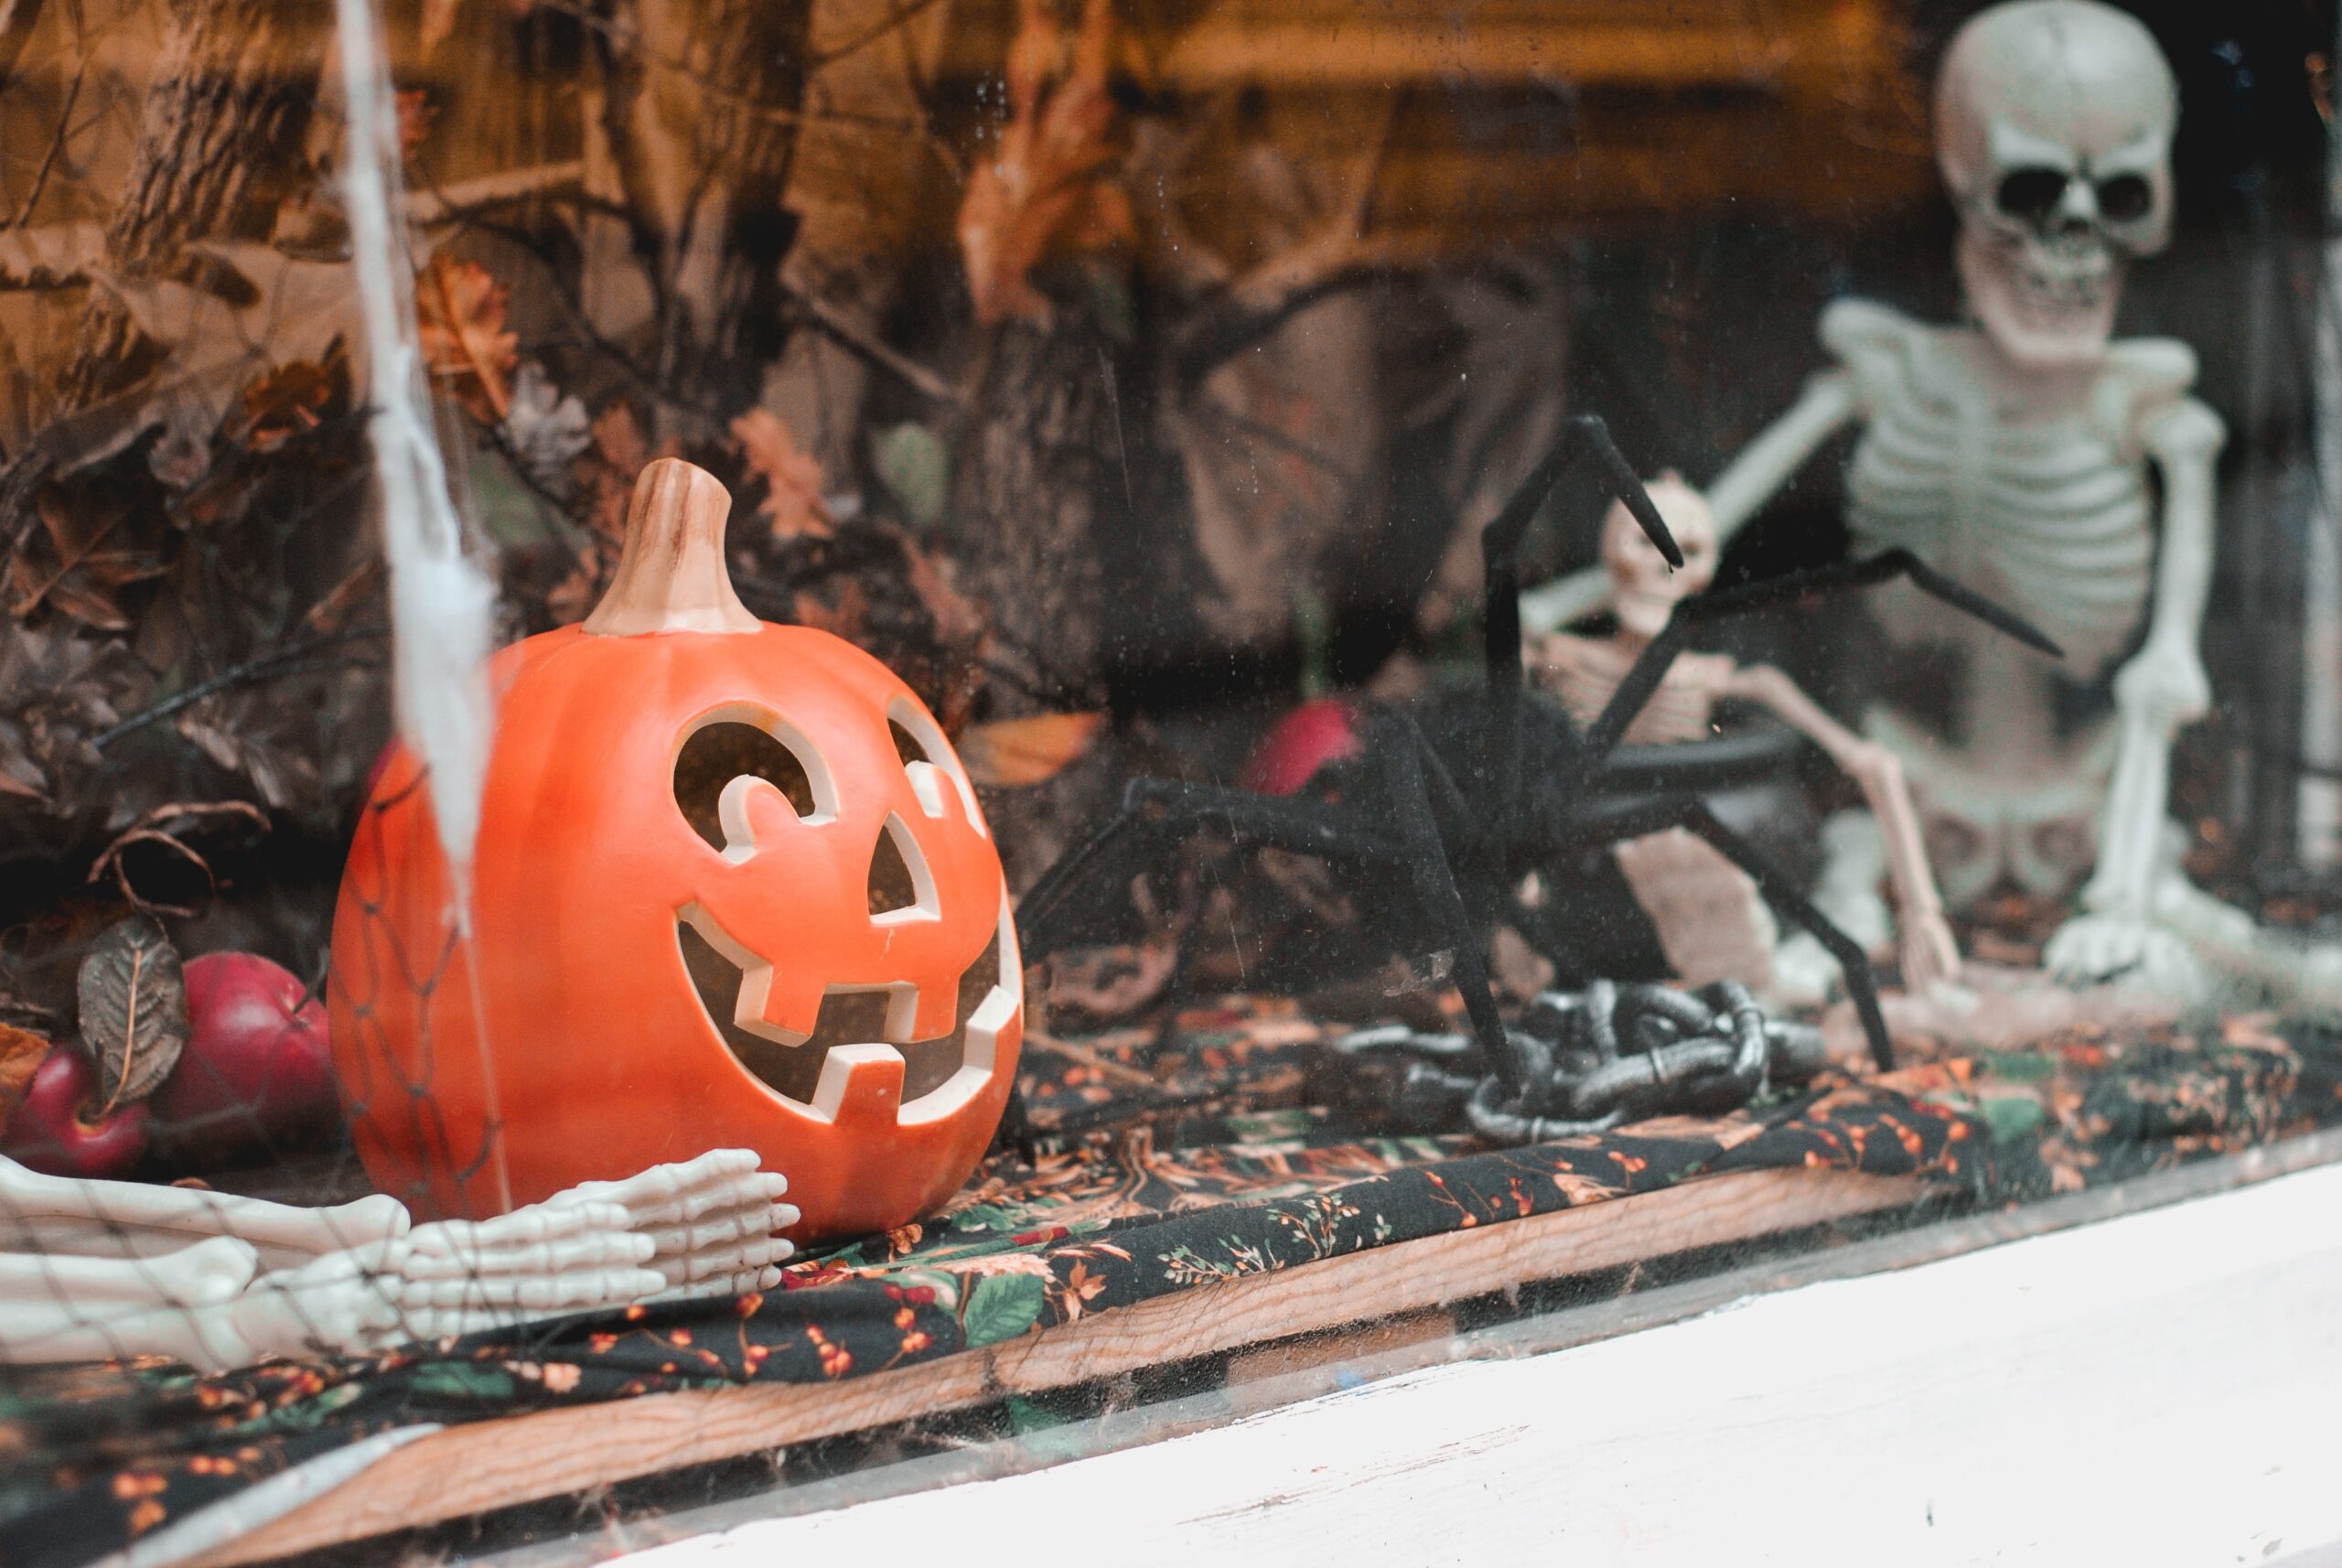 plastic pumpkin spider and skeleton in shop window.